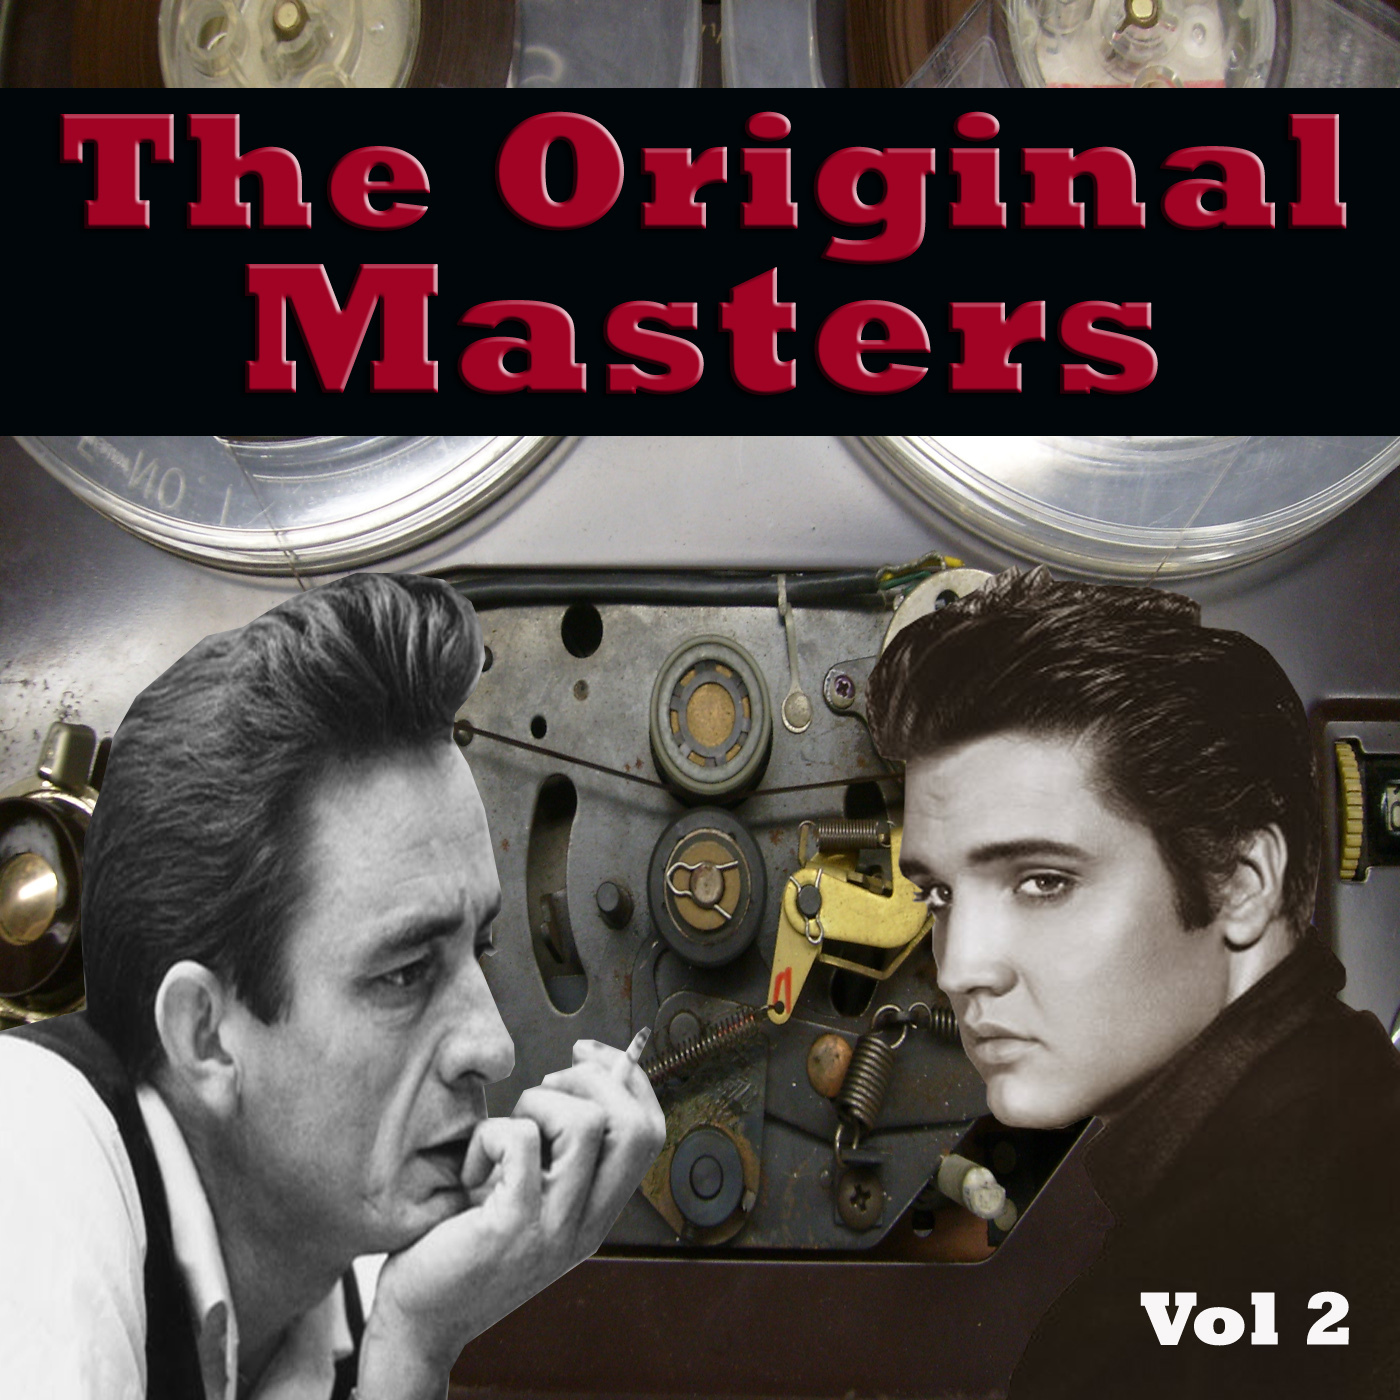 The Original Masters Vol 2